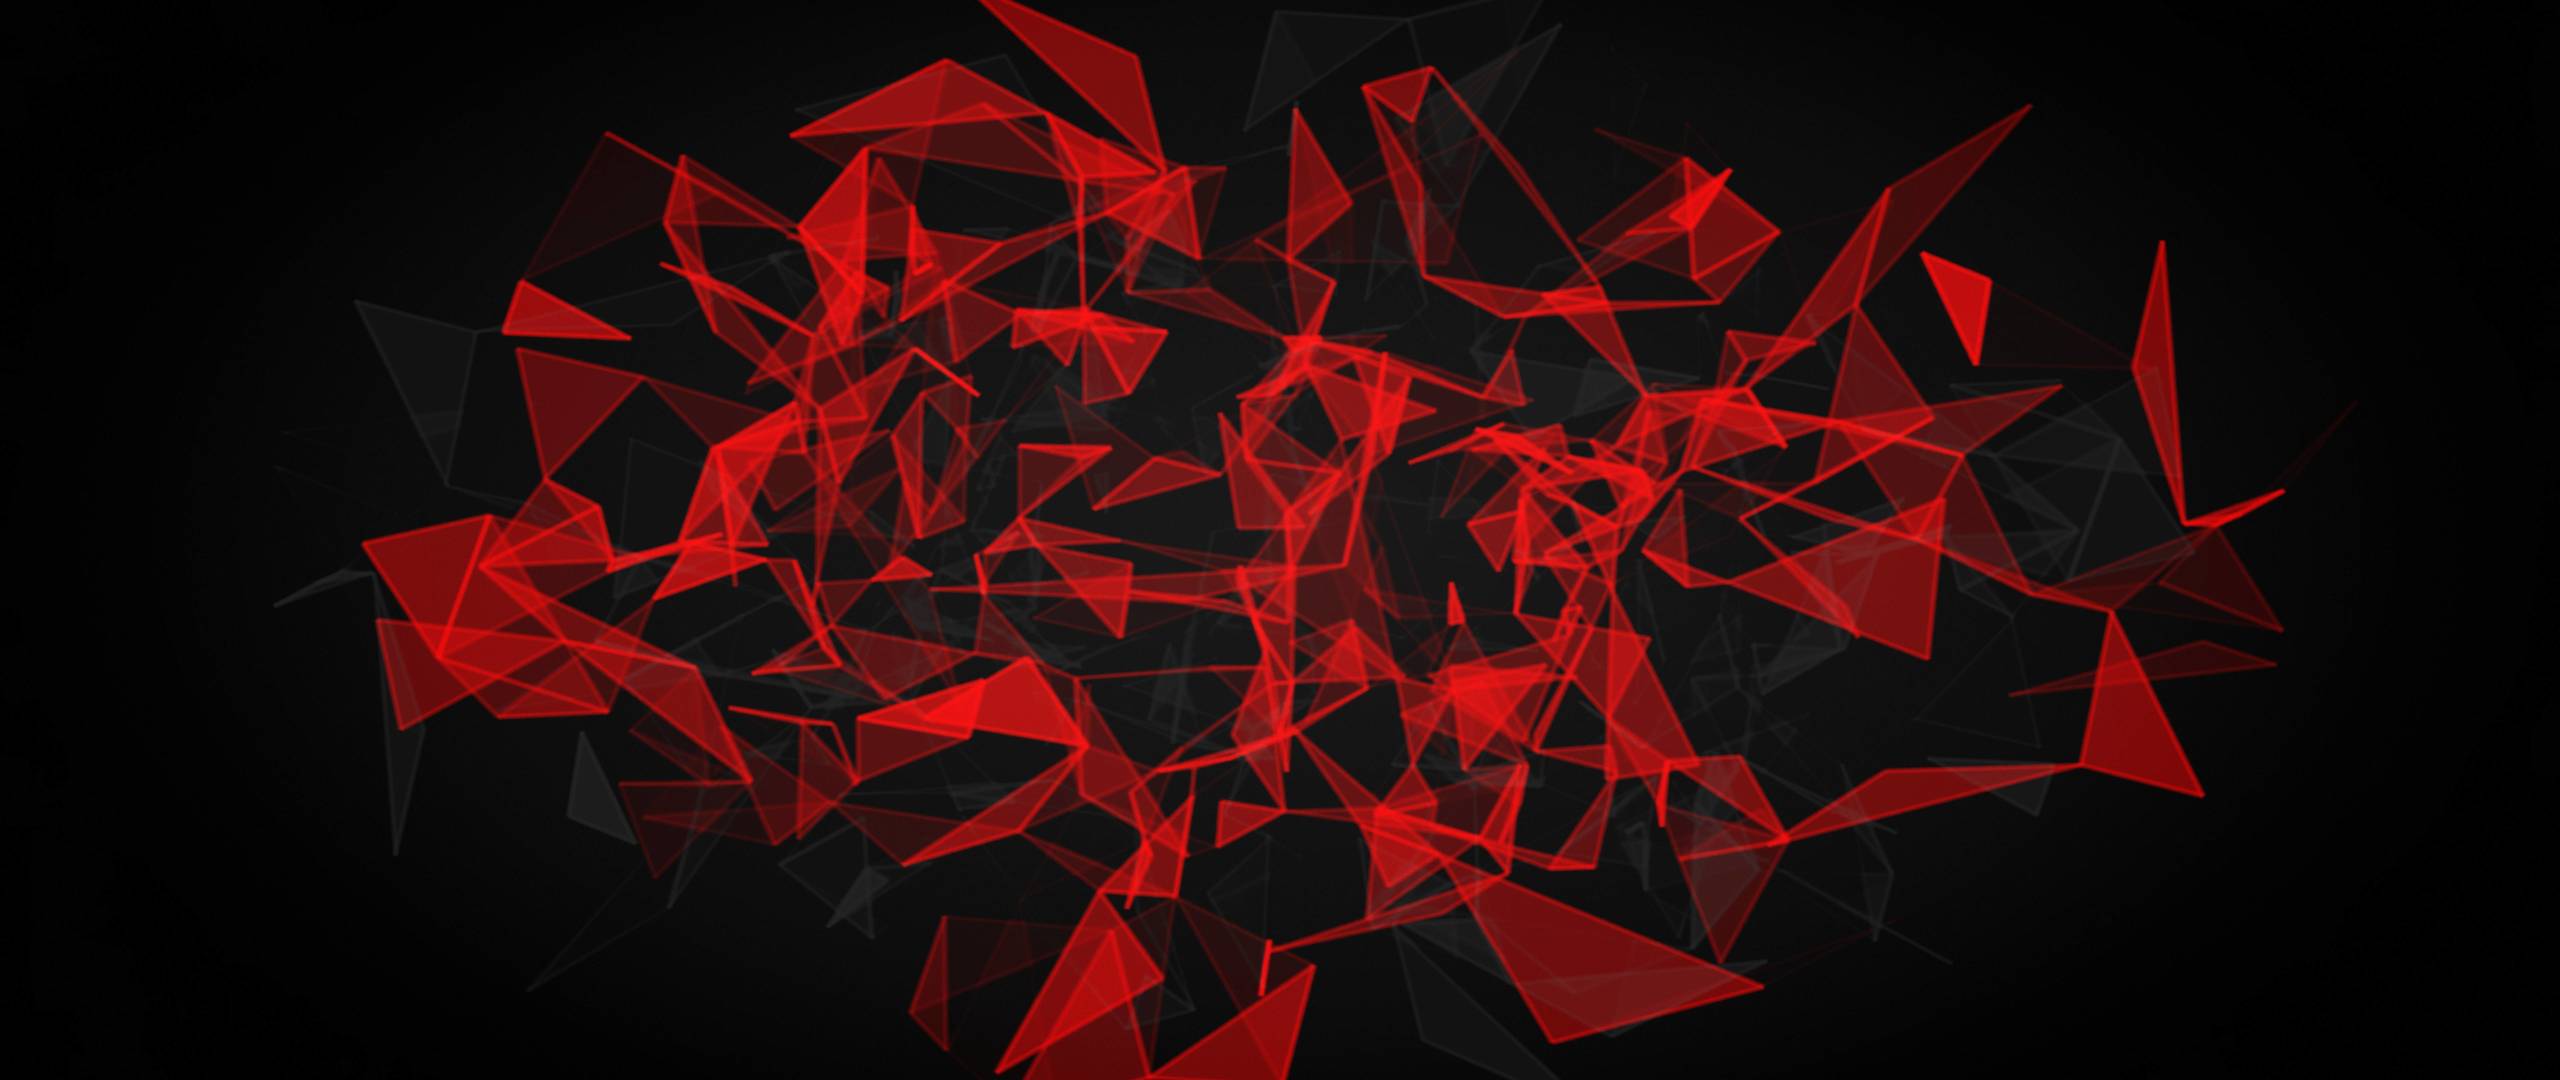 black and red wallpaper,red,black,pattern,graphic design,design